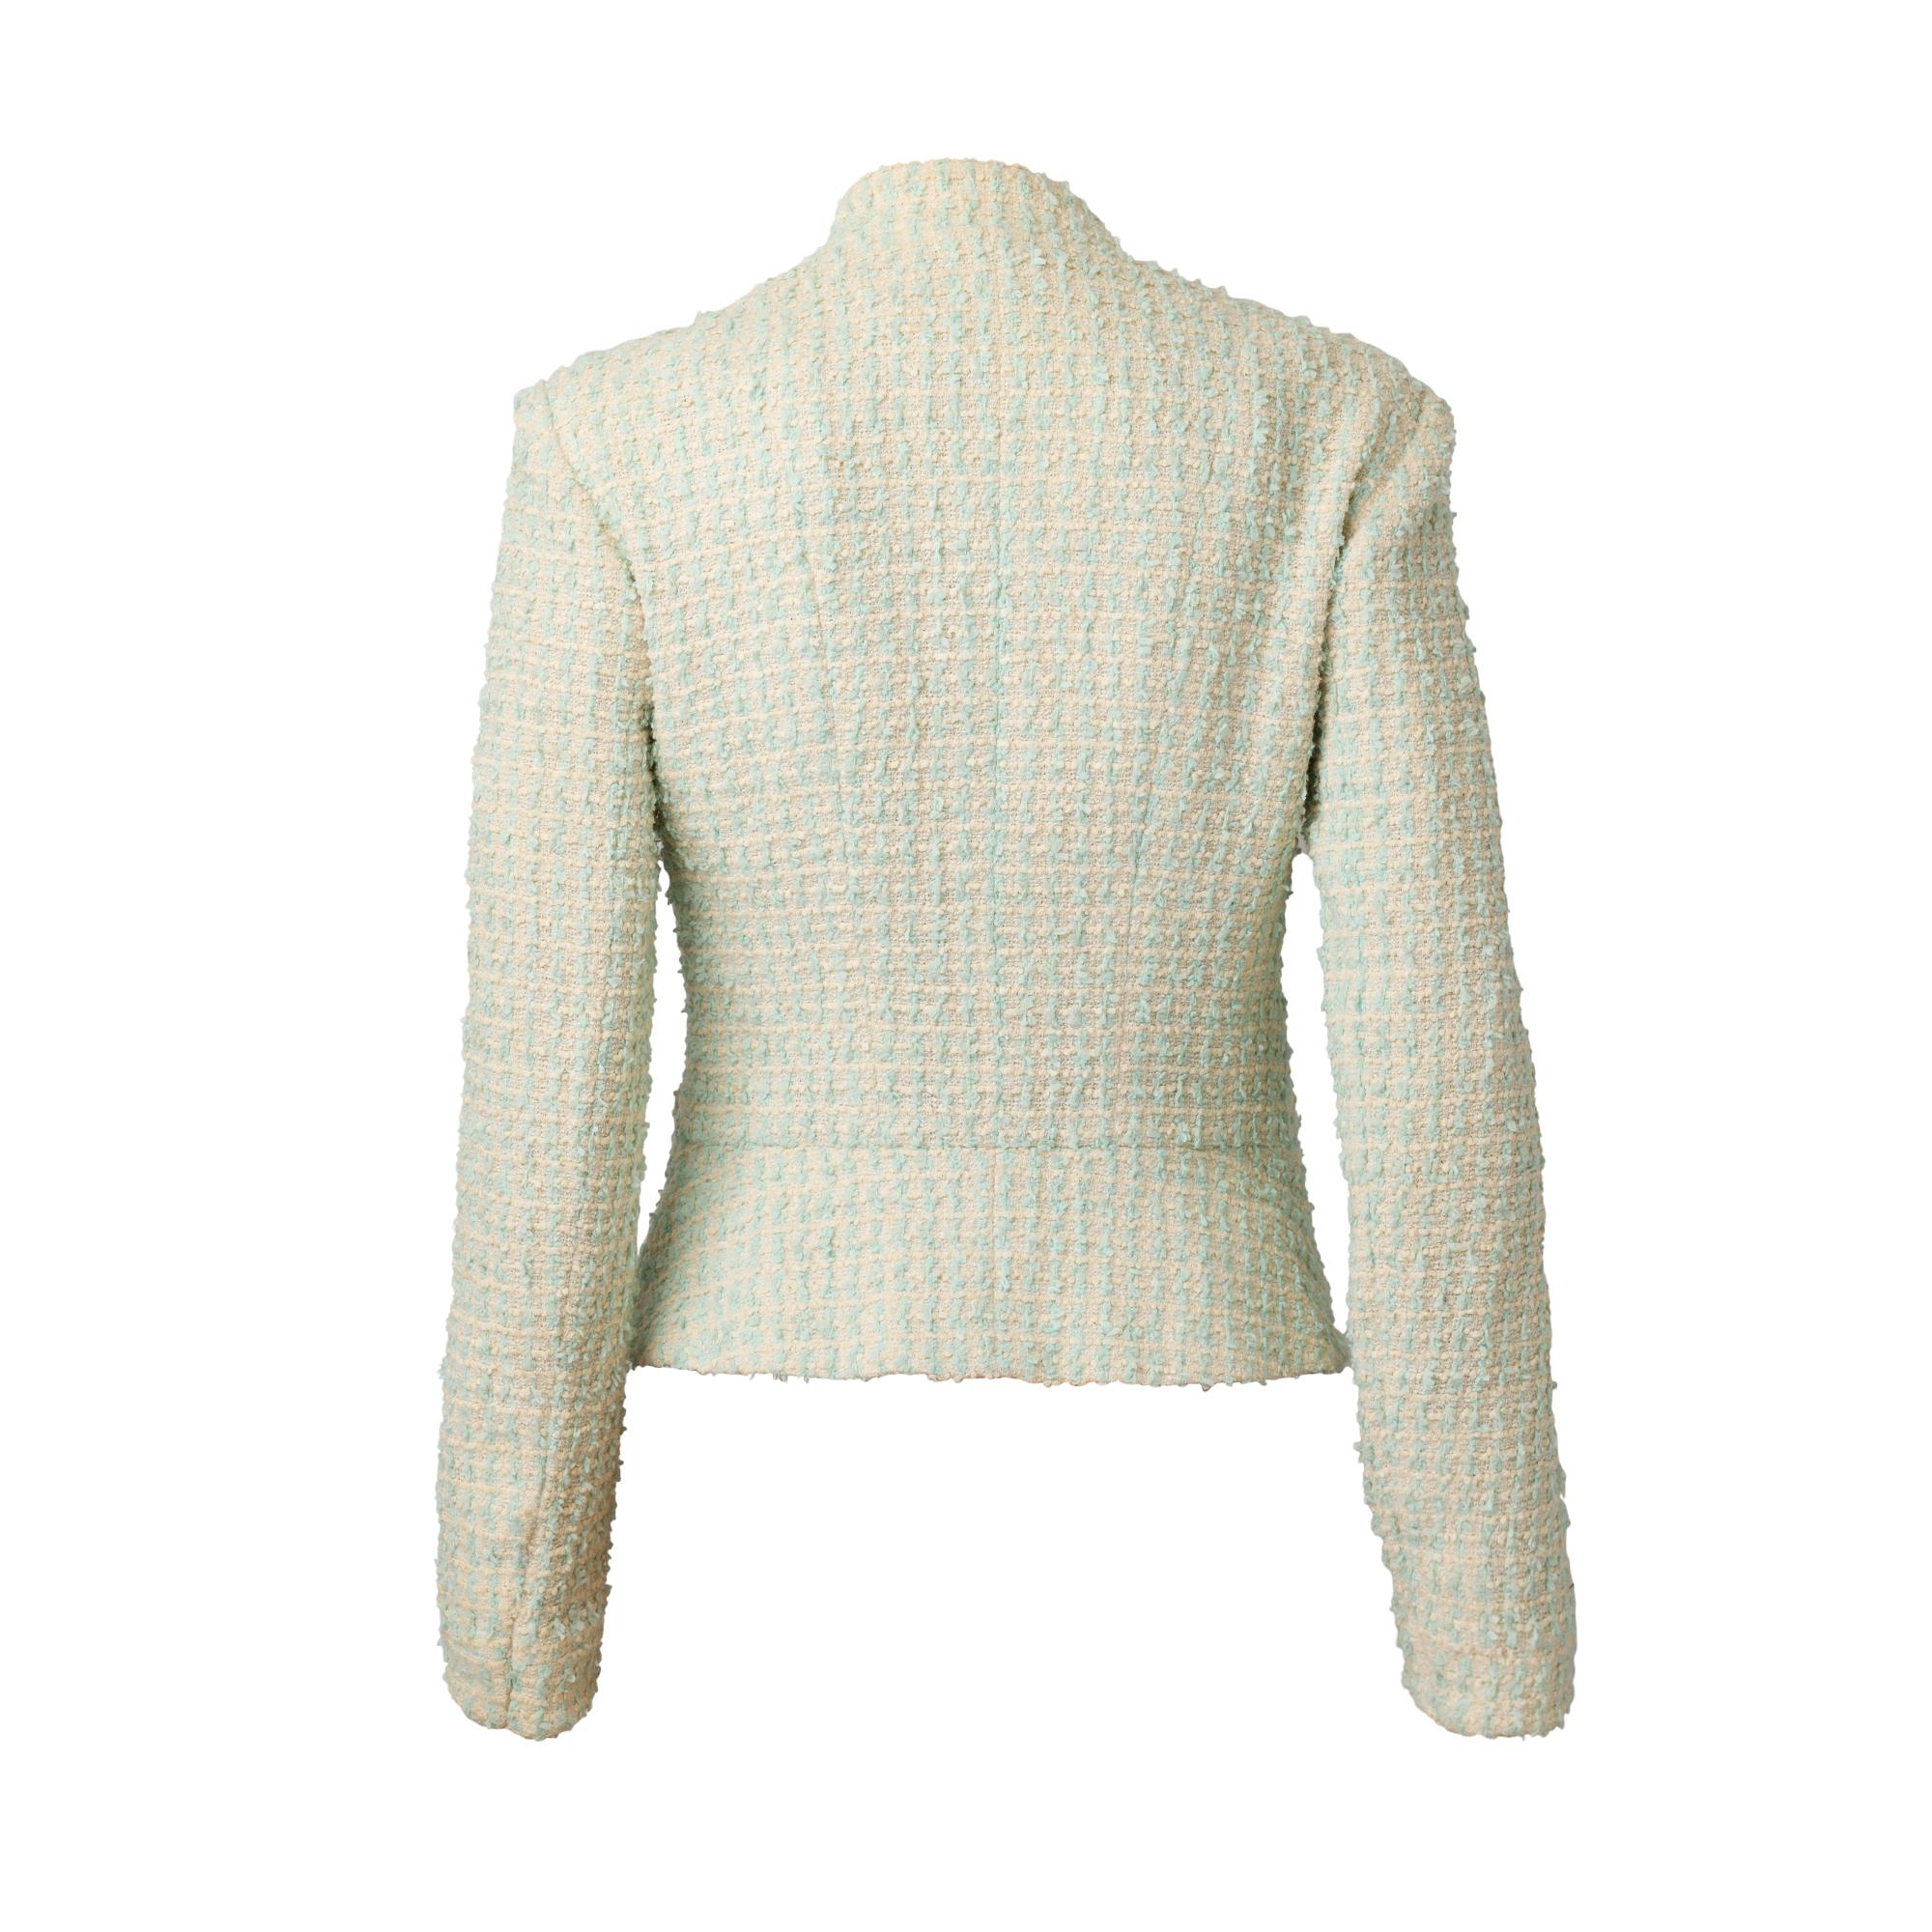 Beige Amazing Chanel Jacket in beige and pastel green tweed